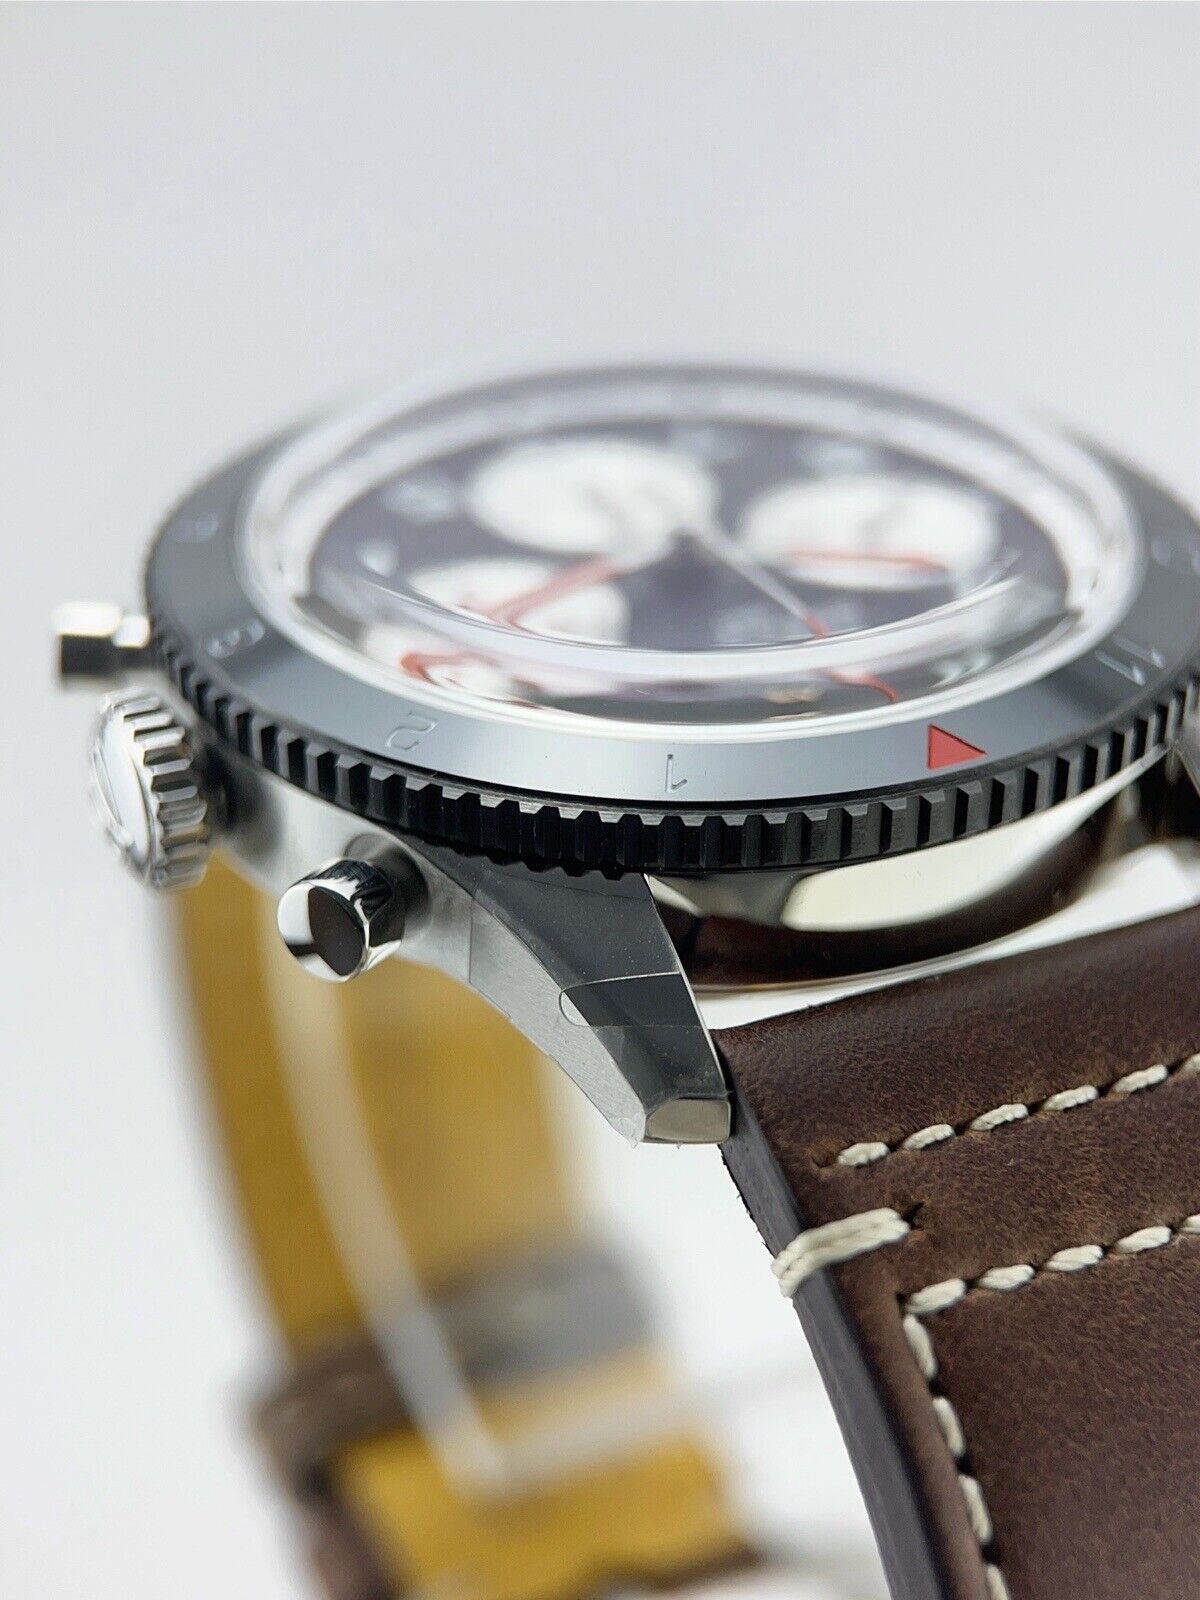 Breitling Classic AVI Steel 42mm Automatic Black Dial Men's Watch Y23380 - B/P